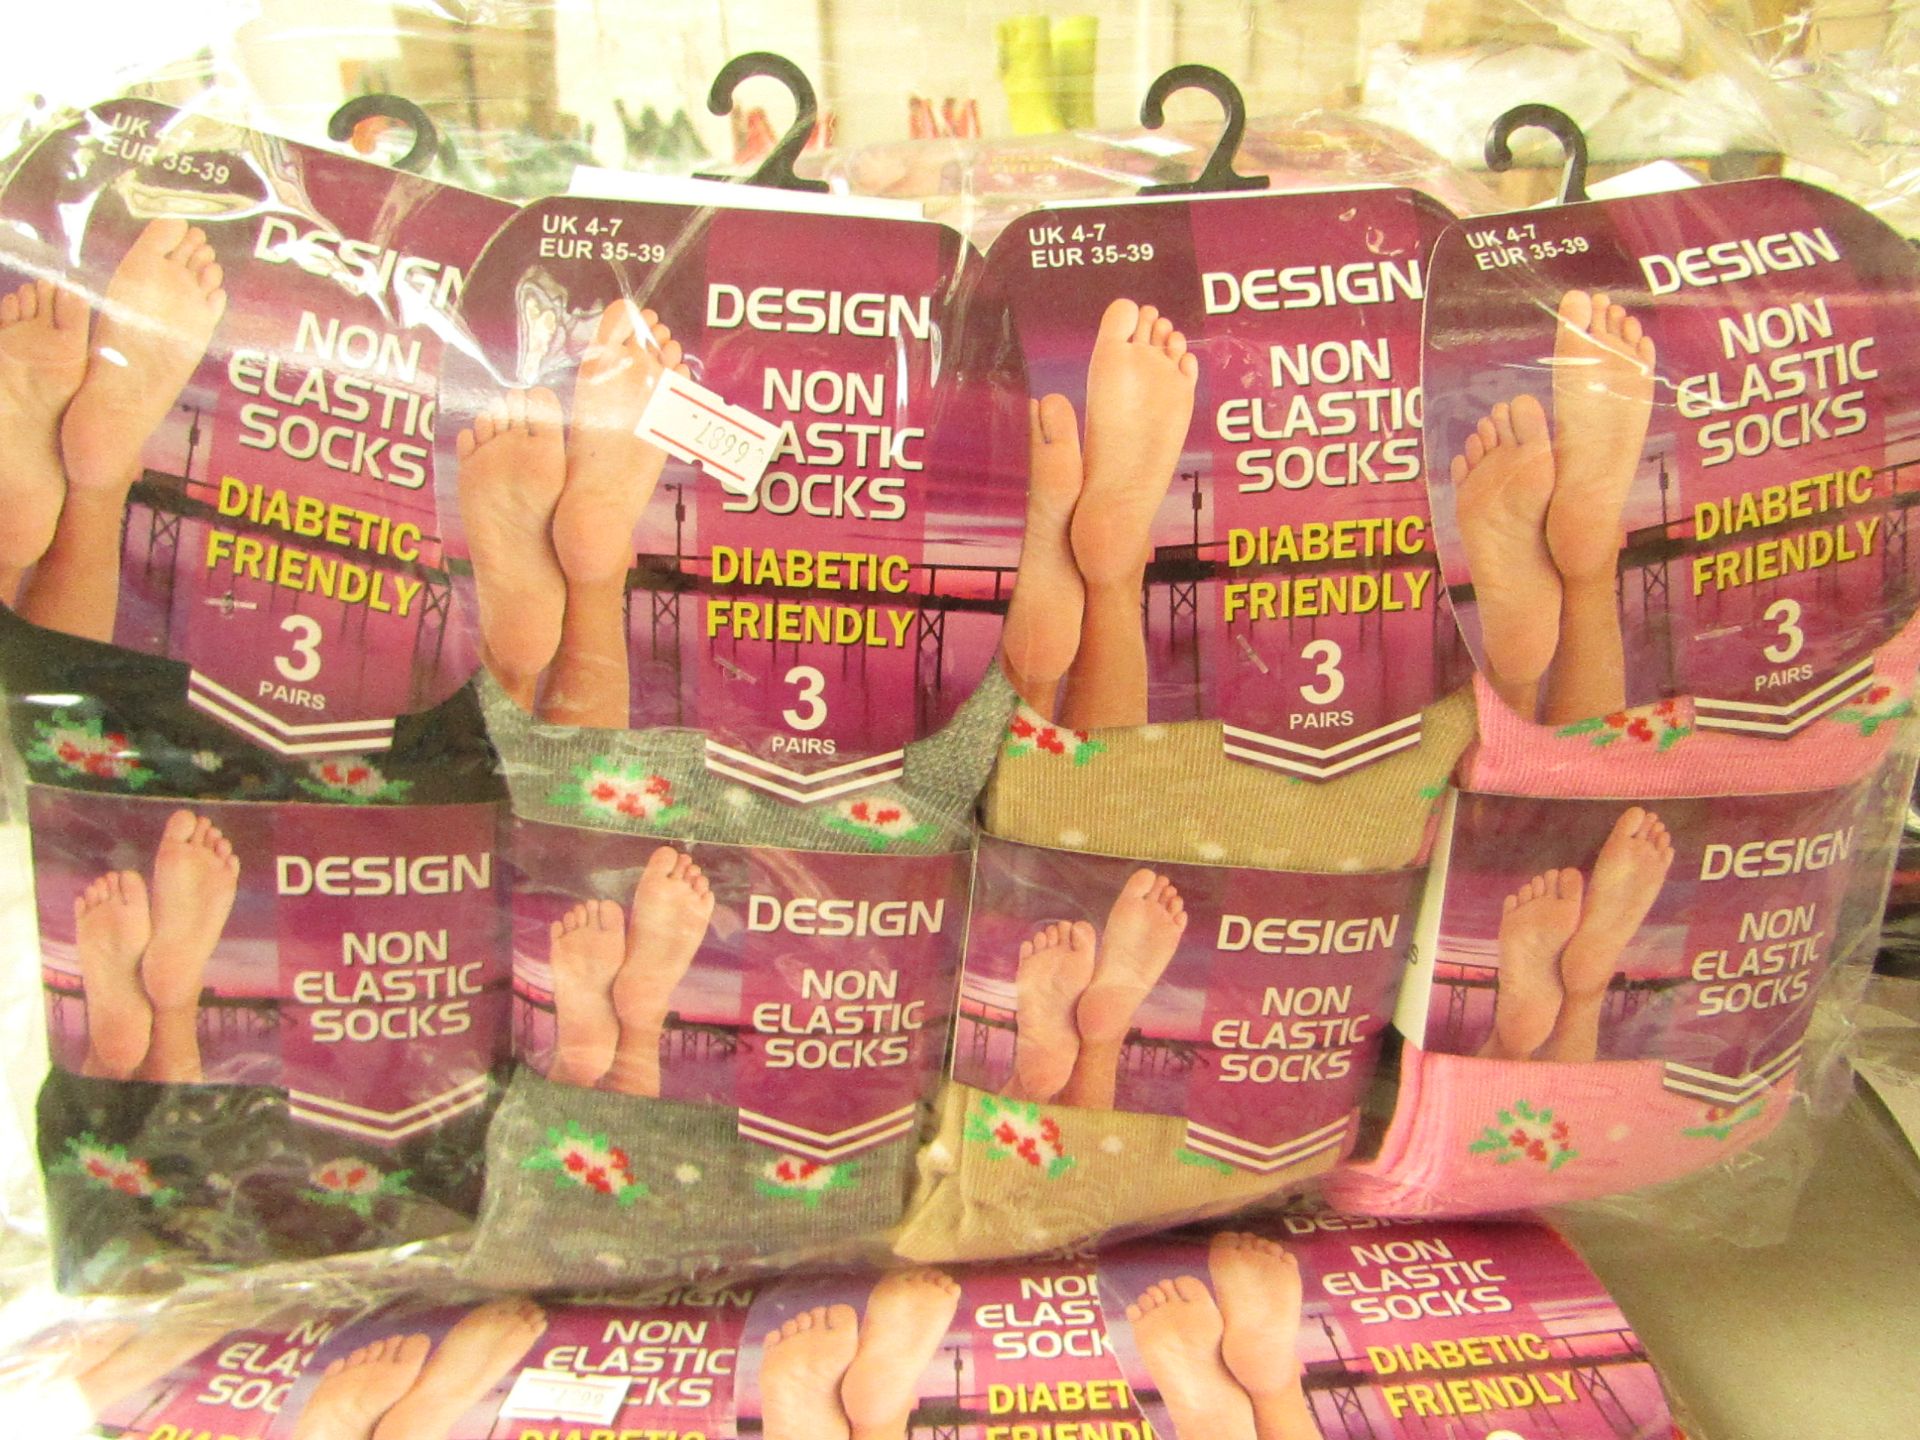 12 x pairs of Ladies Design Non Elastic Diabetic Socks size 4-6 new & packaged